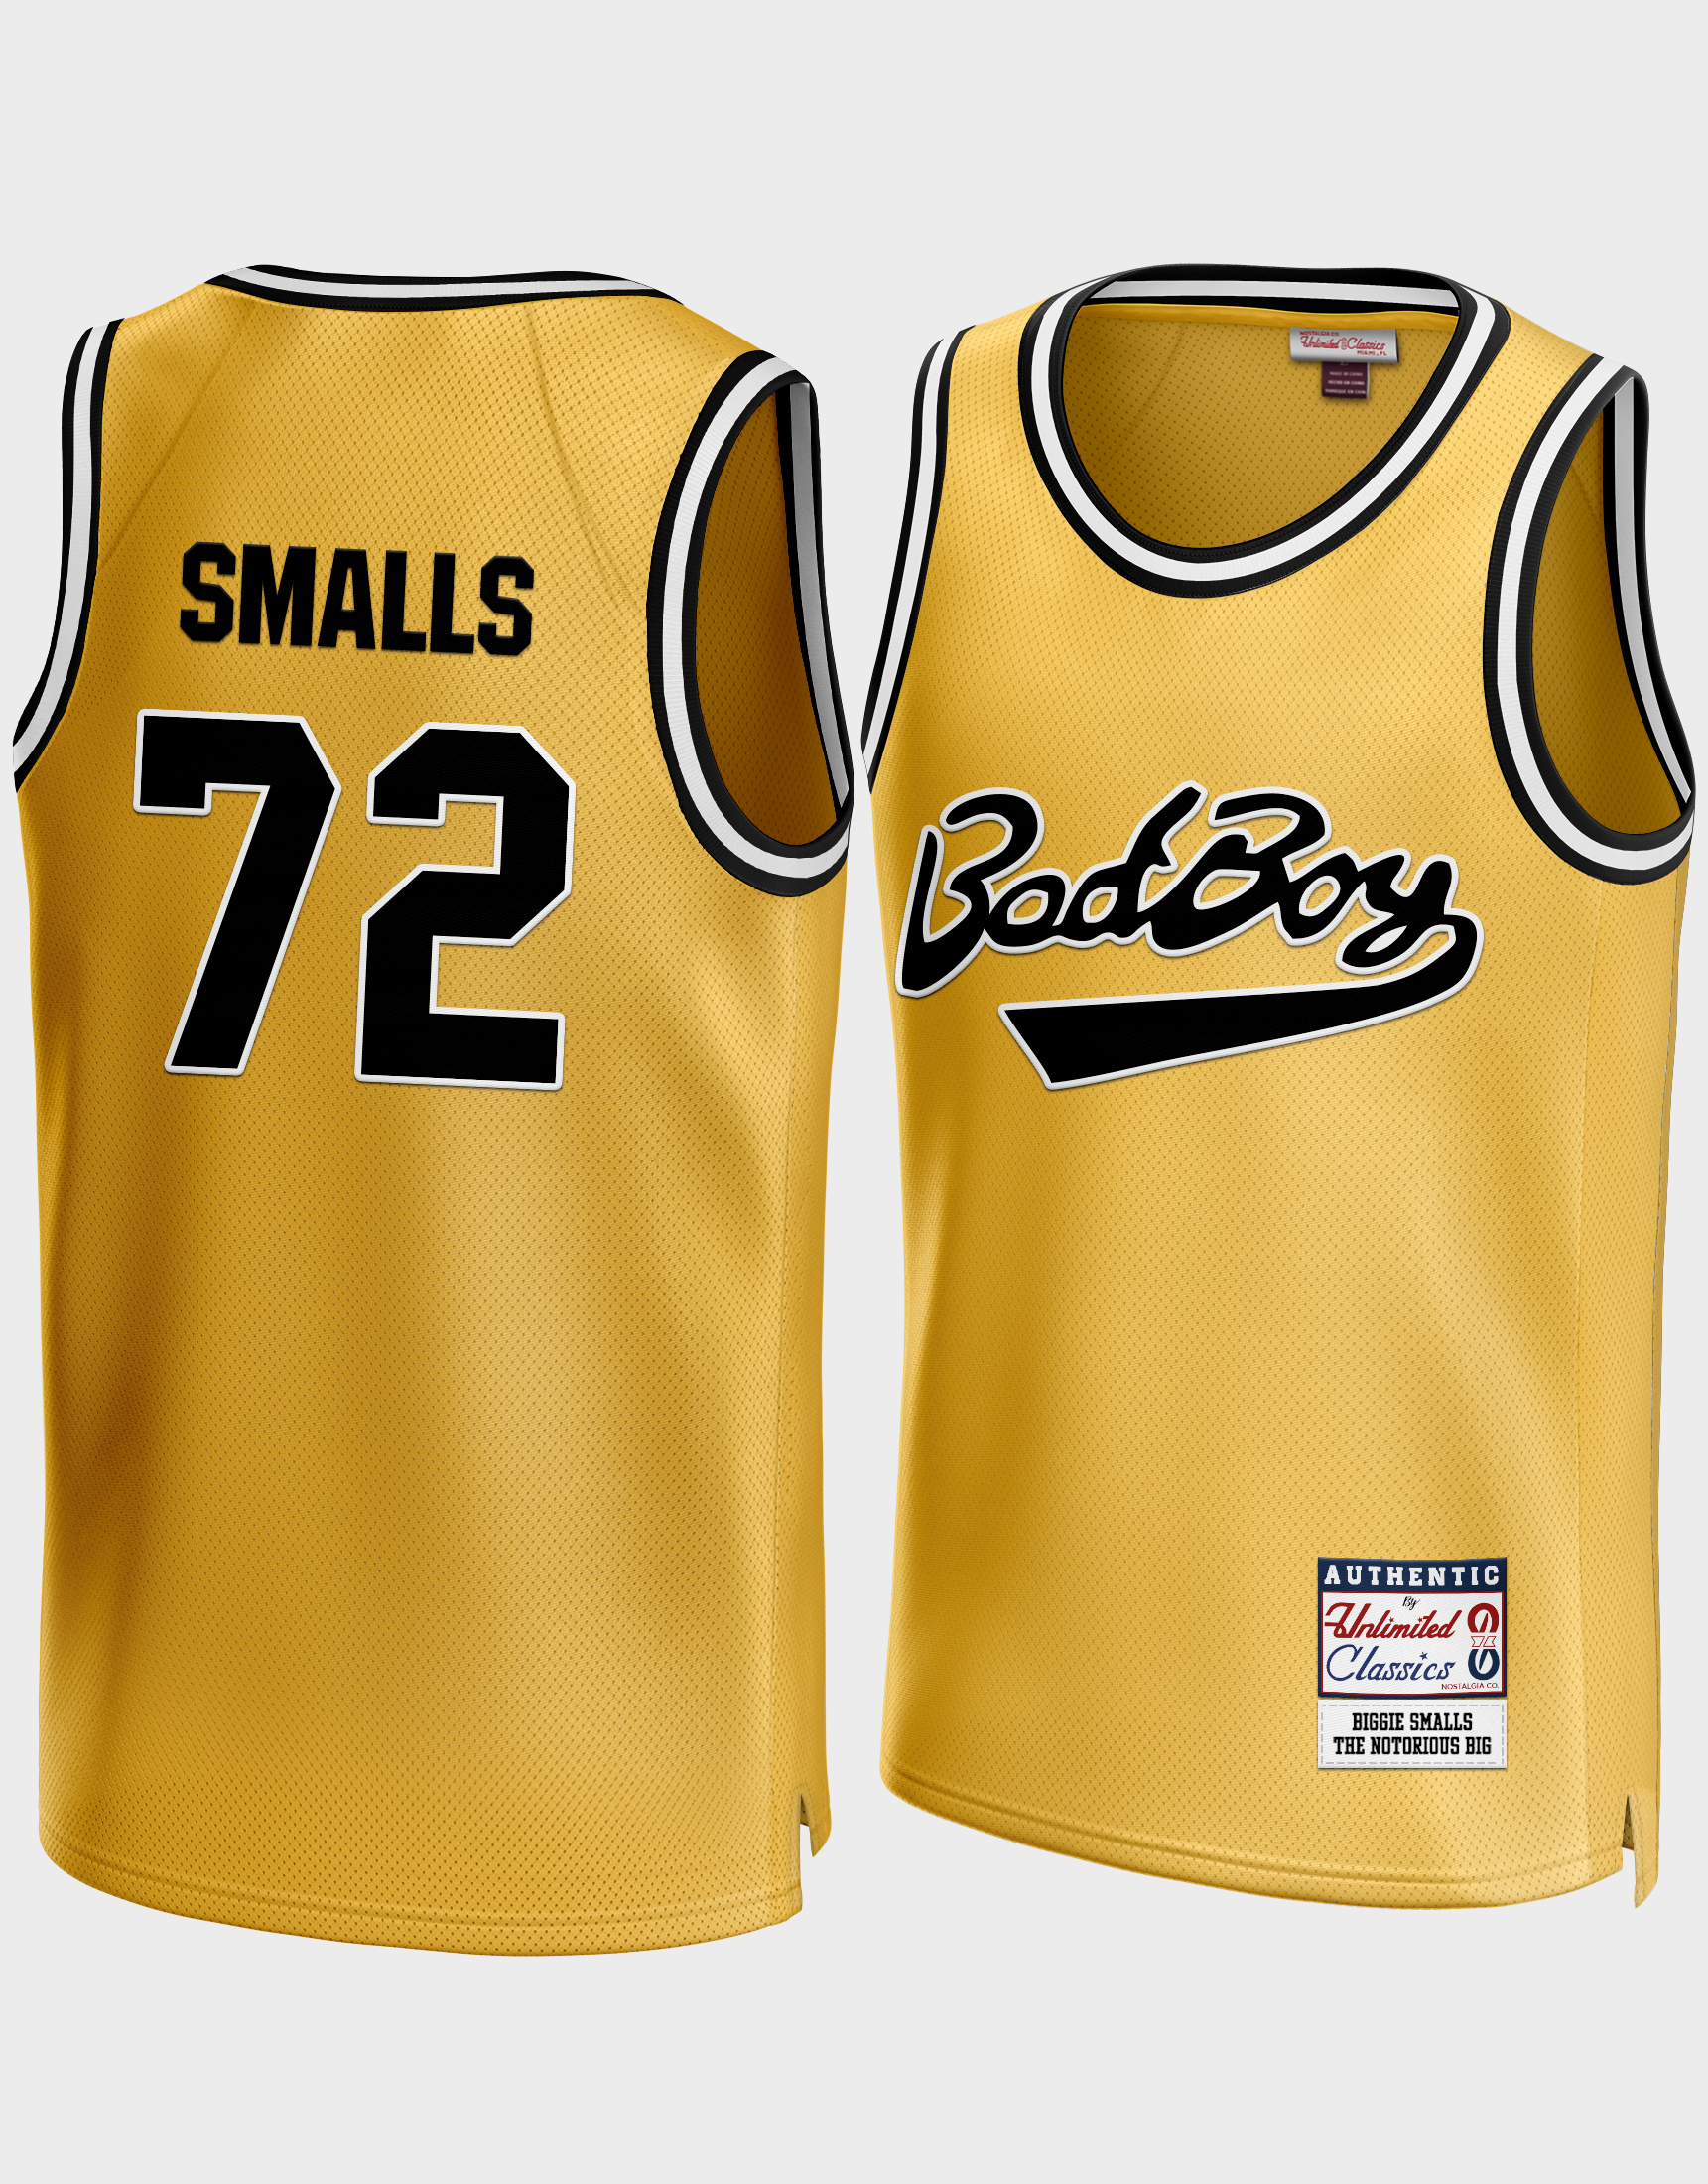 Biggie Smalls #72 - Bad Boy - Notorious B.I.G. Jerseys